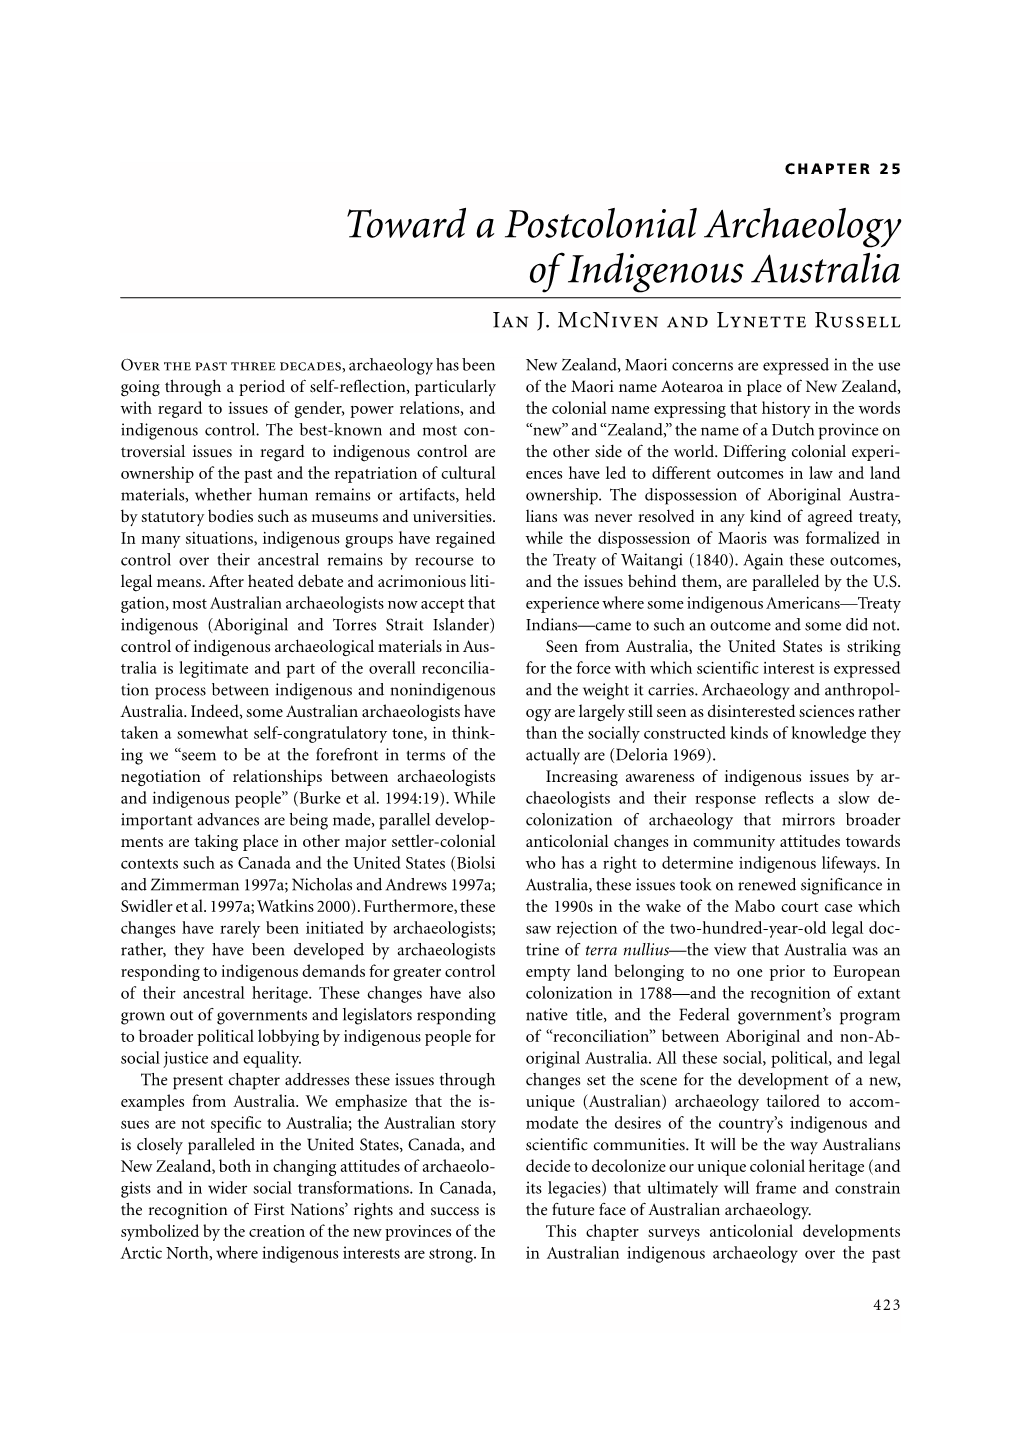 Toward a Postcolonial Archaeology of Indigenous Australia Ian J